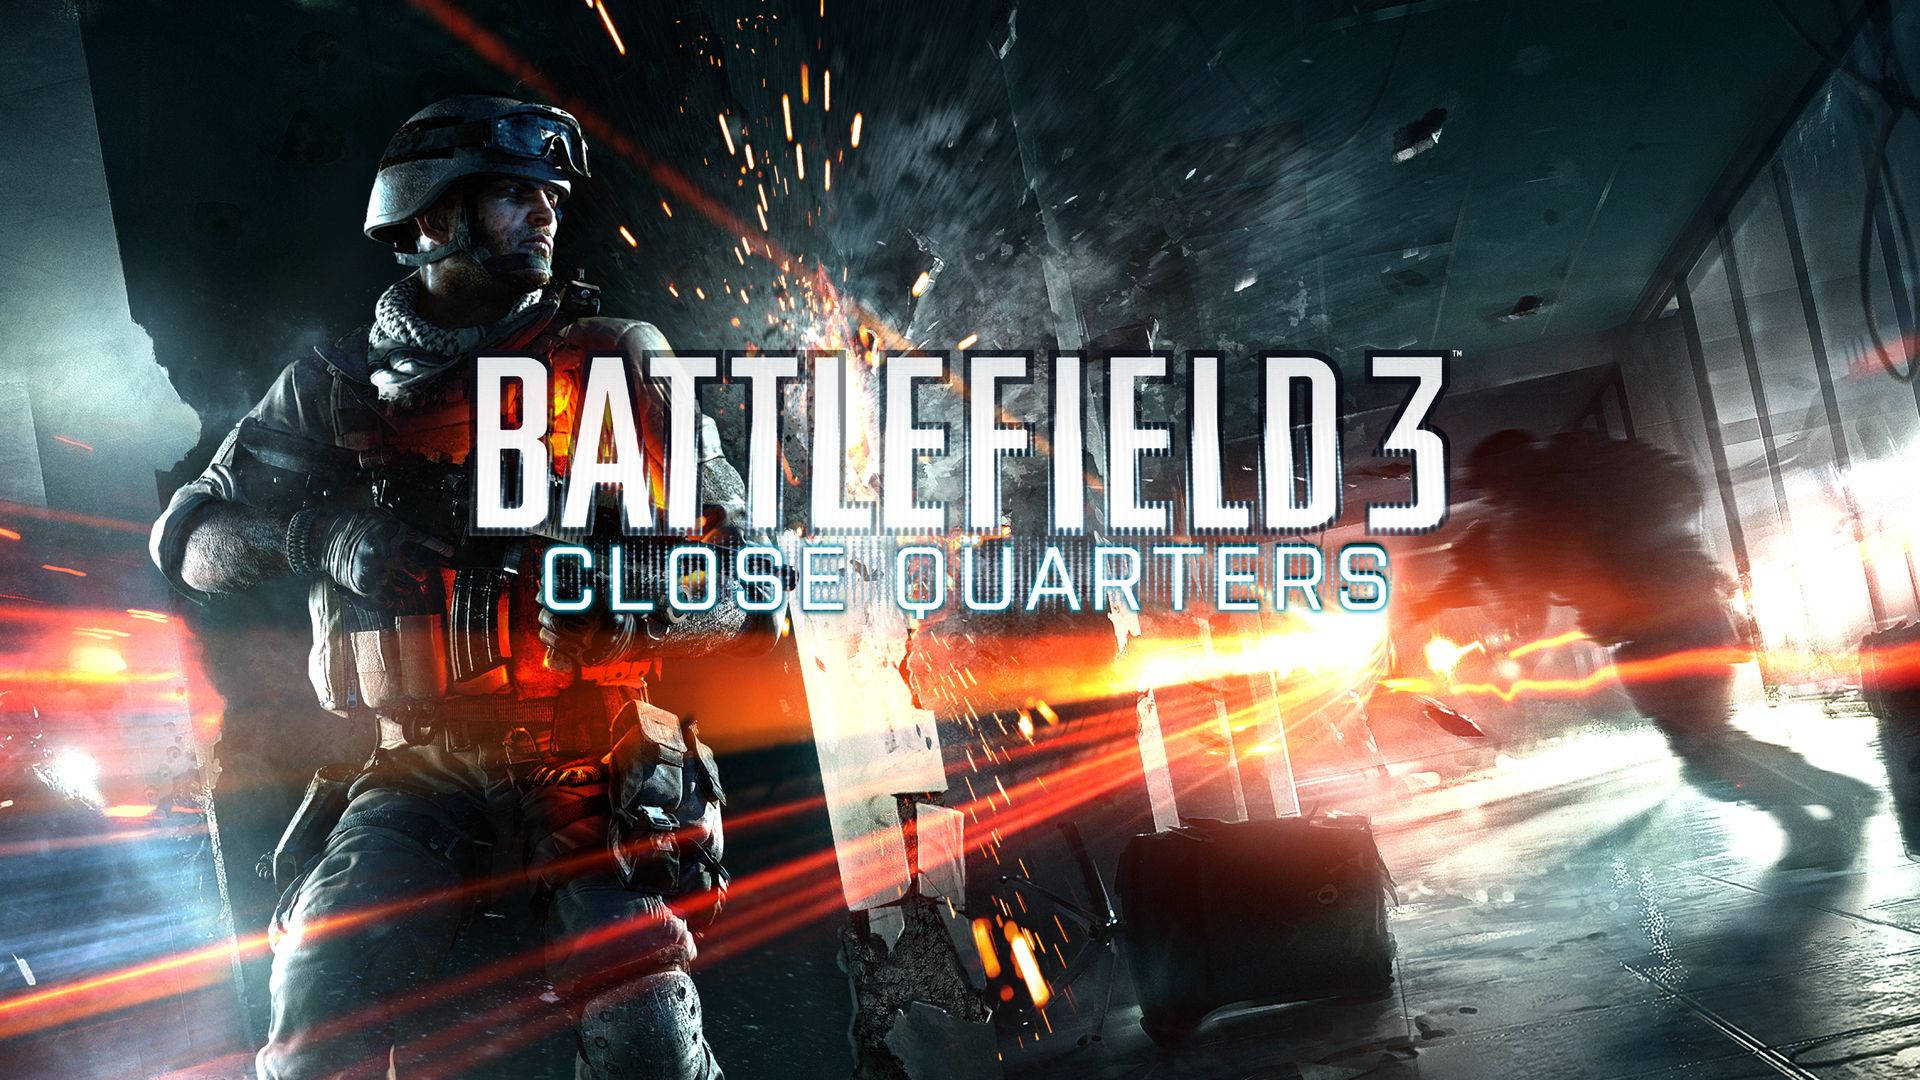 Cool Battlefield 3 Close Quarters Video Game Expansion Wallpaper